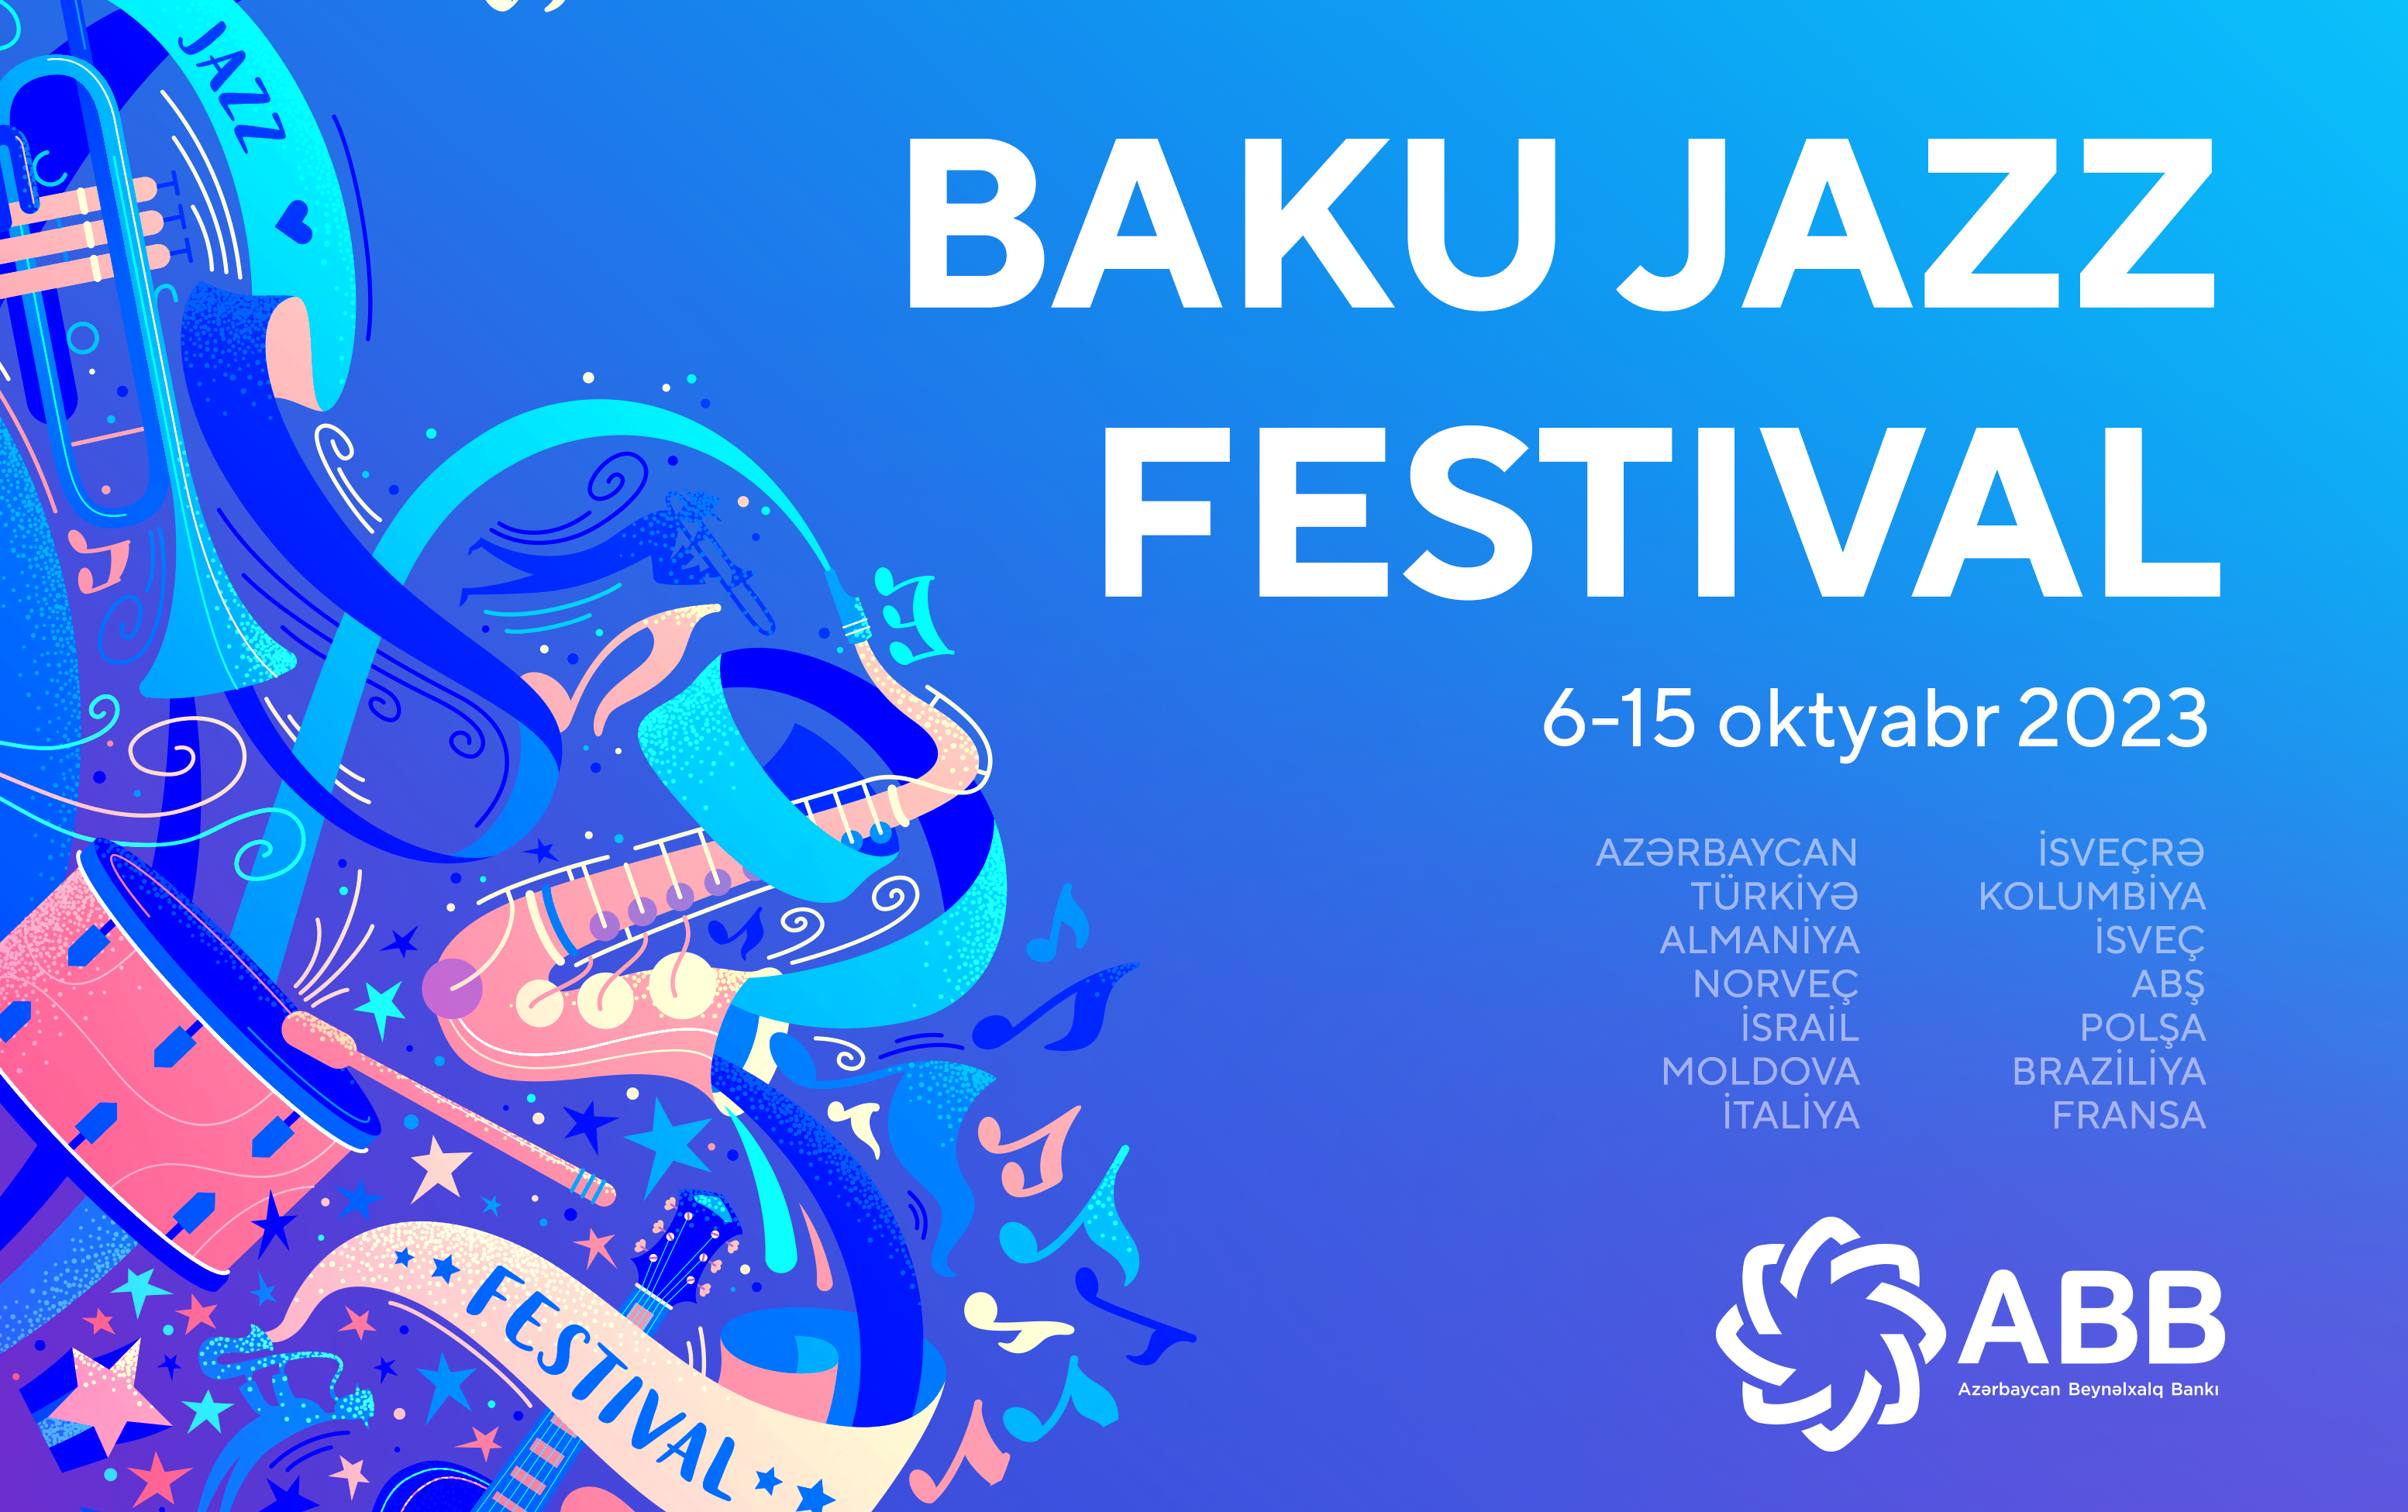 jazz-festival